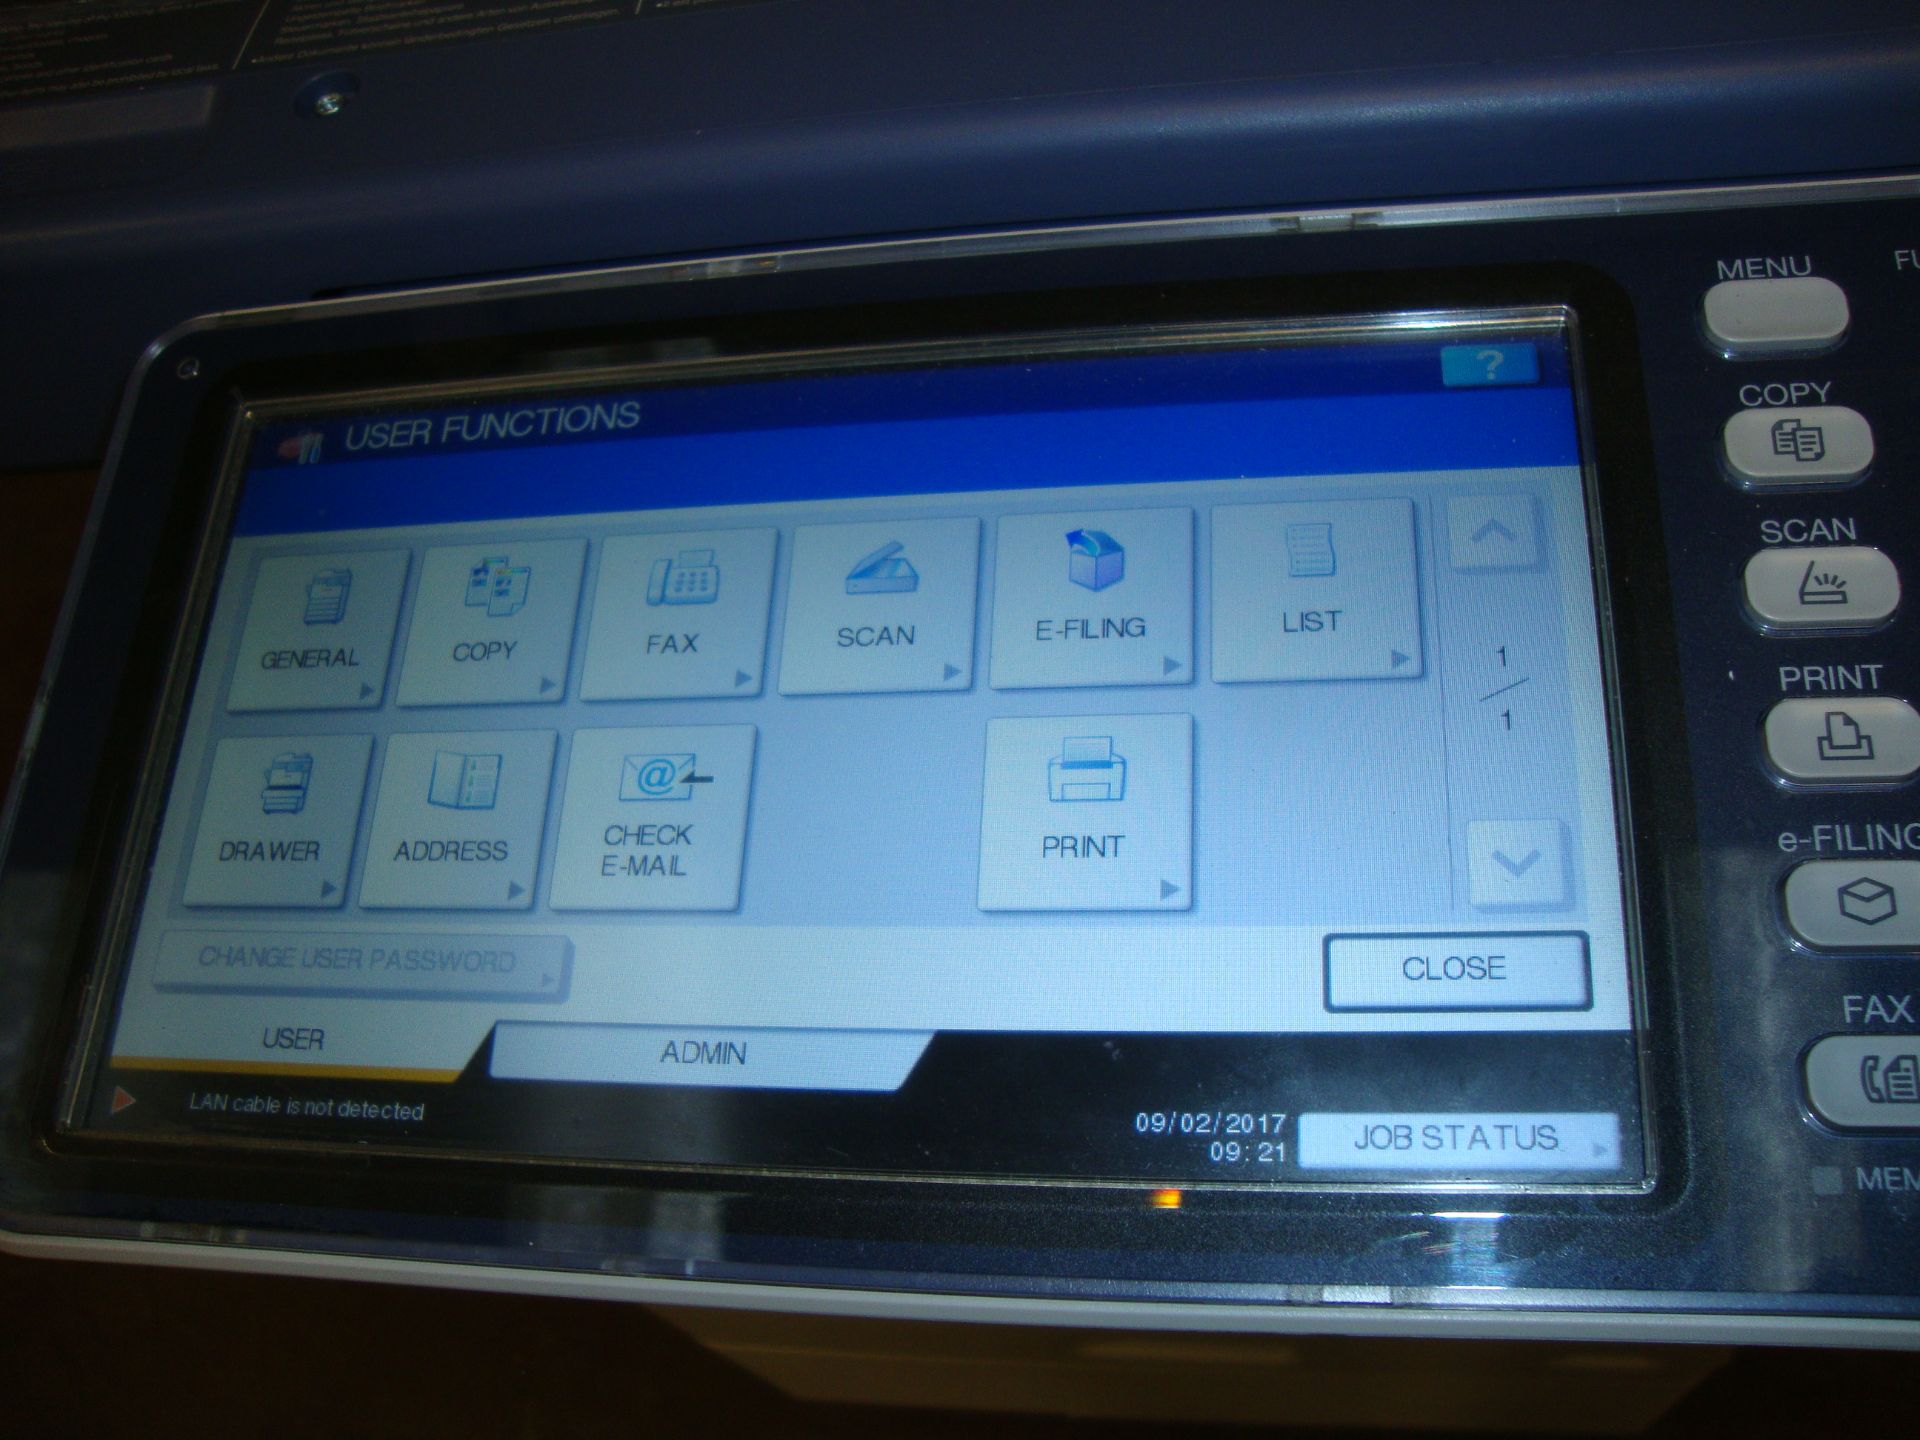 Toshiba e-STUDIO 2550C floor standing multifunction copier/printer with auto document feed, - Image 8 of 9